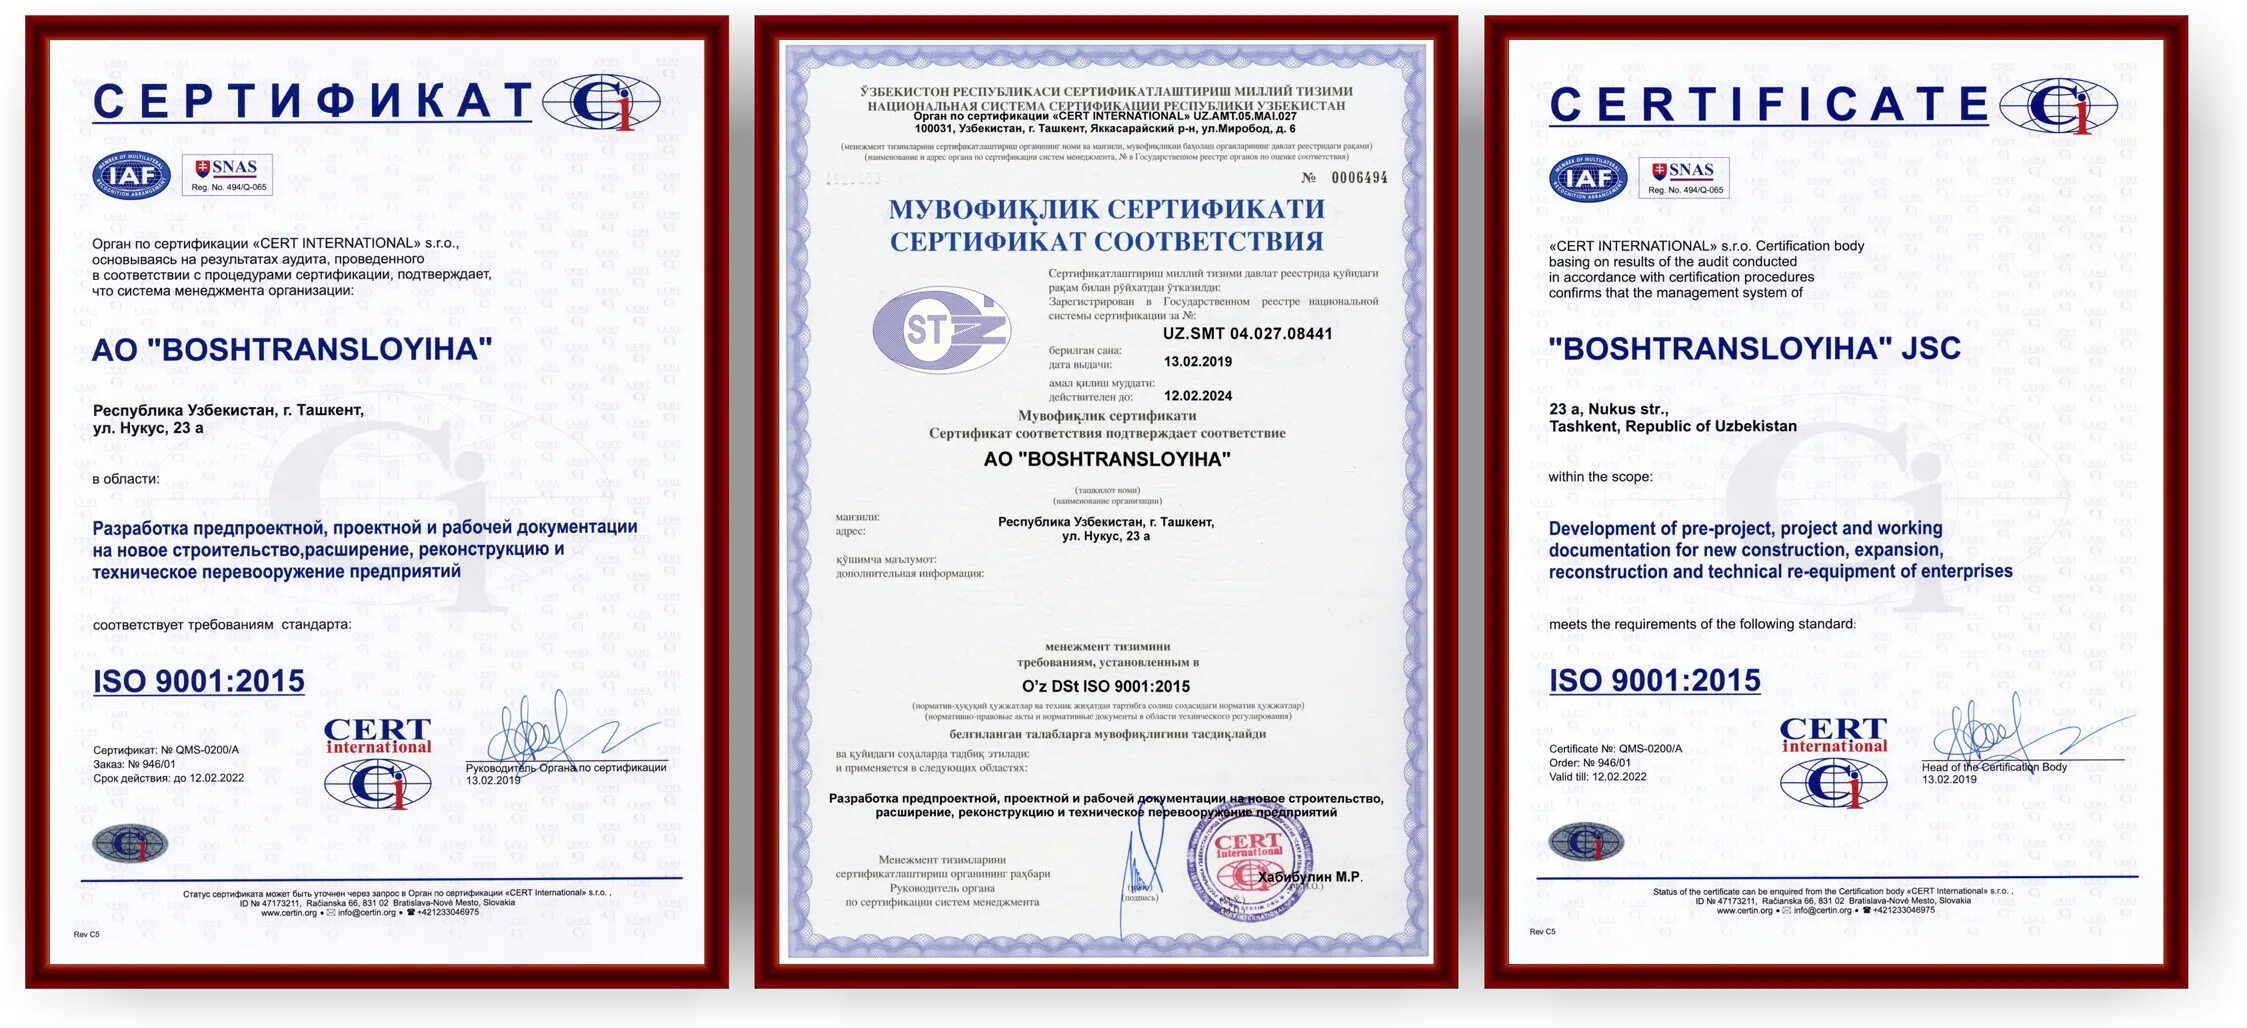 Сертификат ГОСТ Р ИСО 9001. TDM Electric ISO 9001. Сертификат СМК ИСО 9001. Сертификат качества ISO 9001 2000. Купить сертификацию